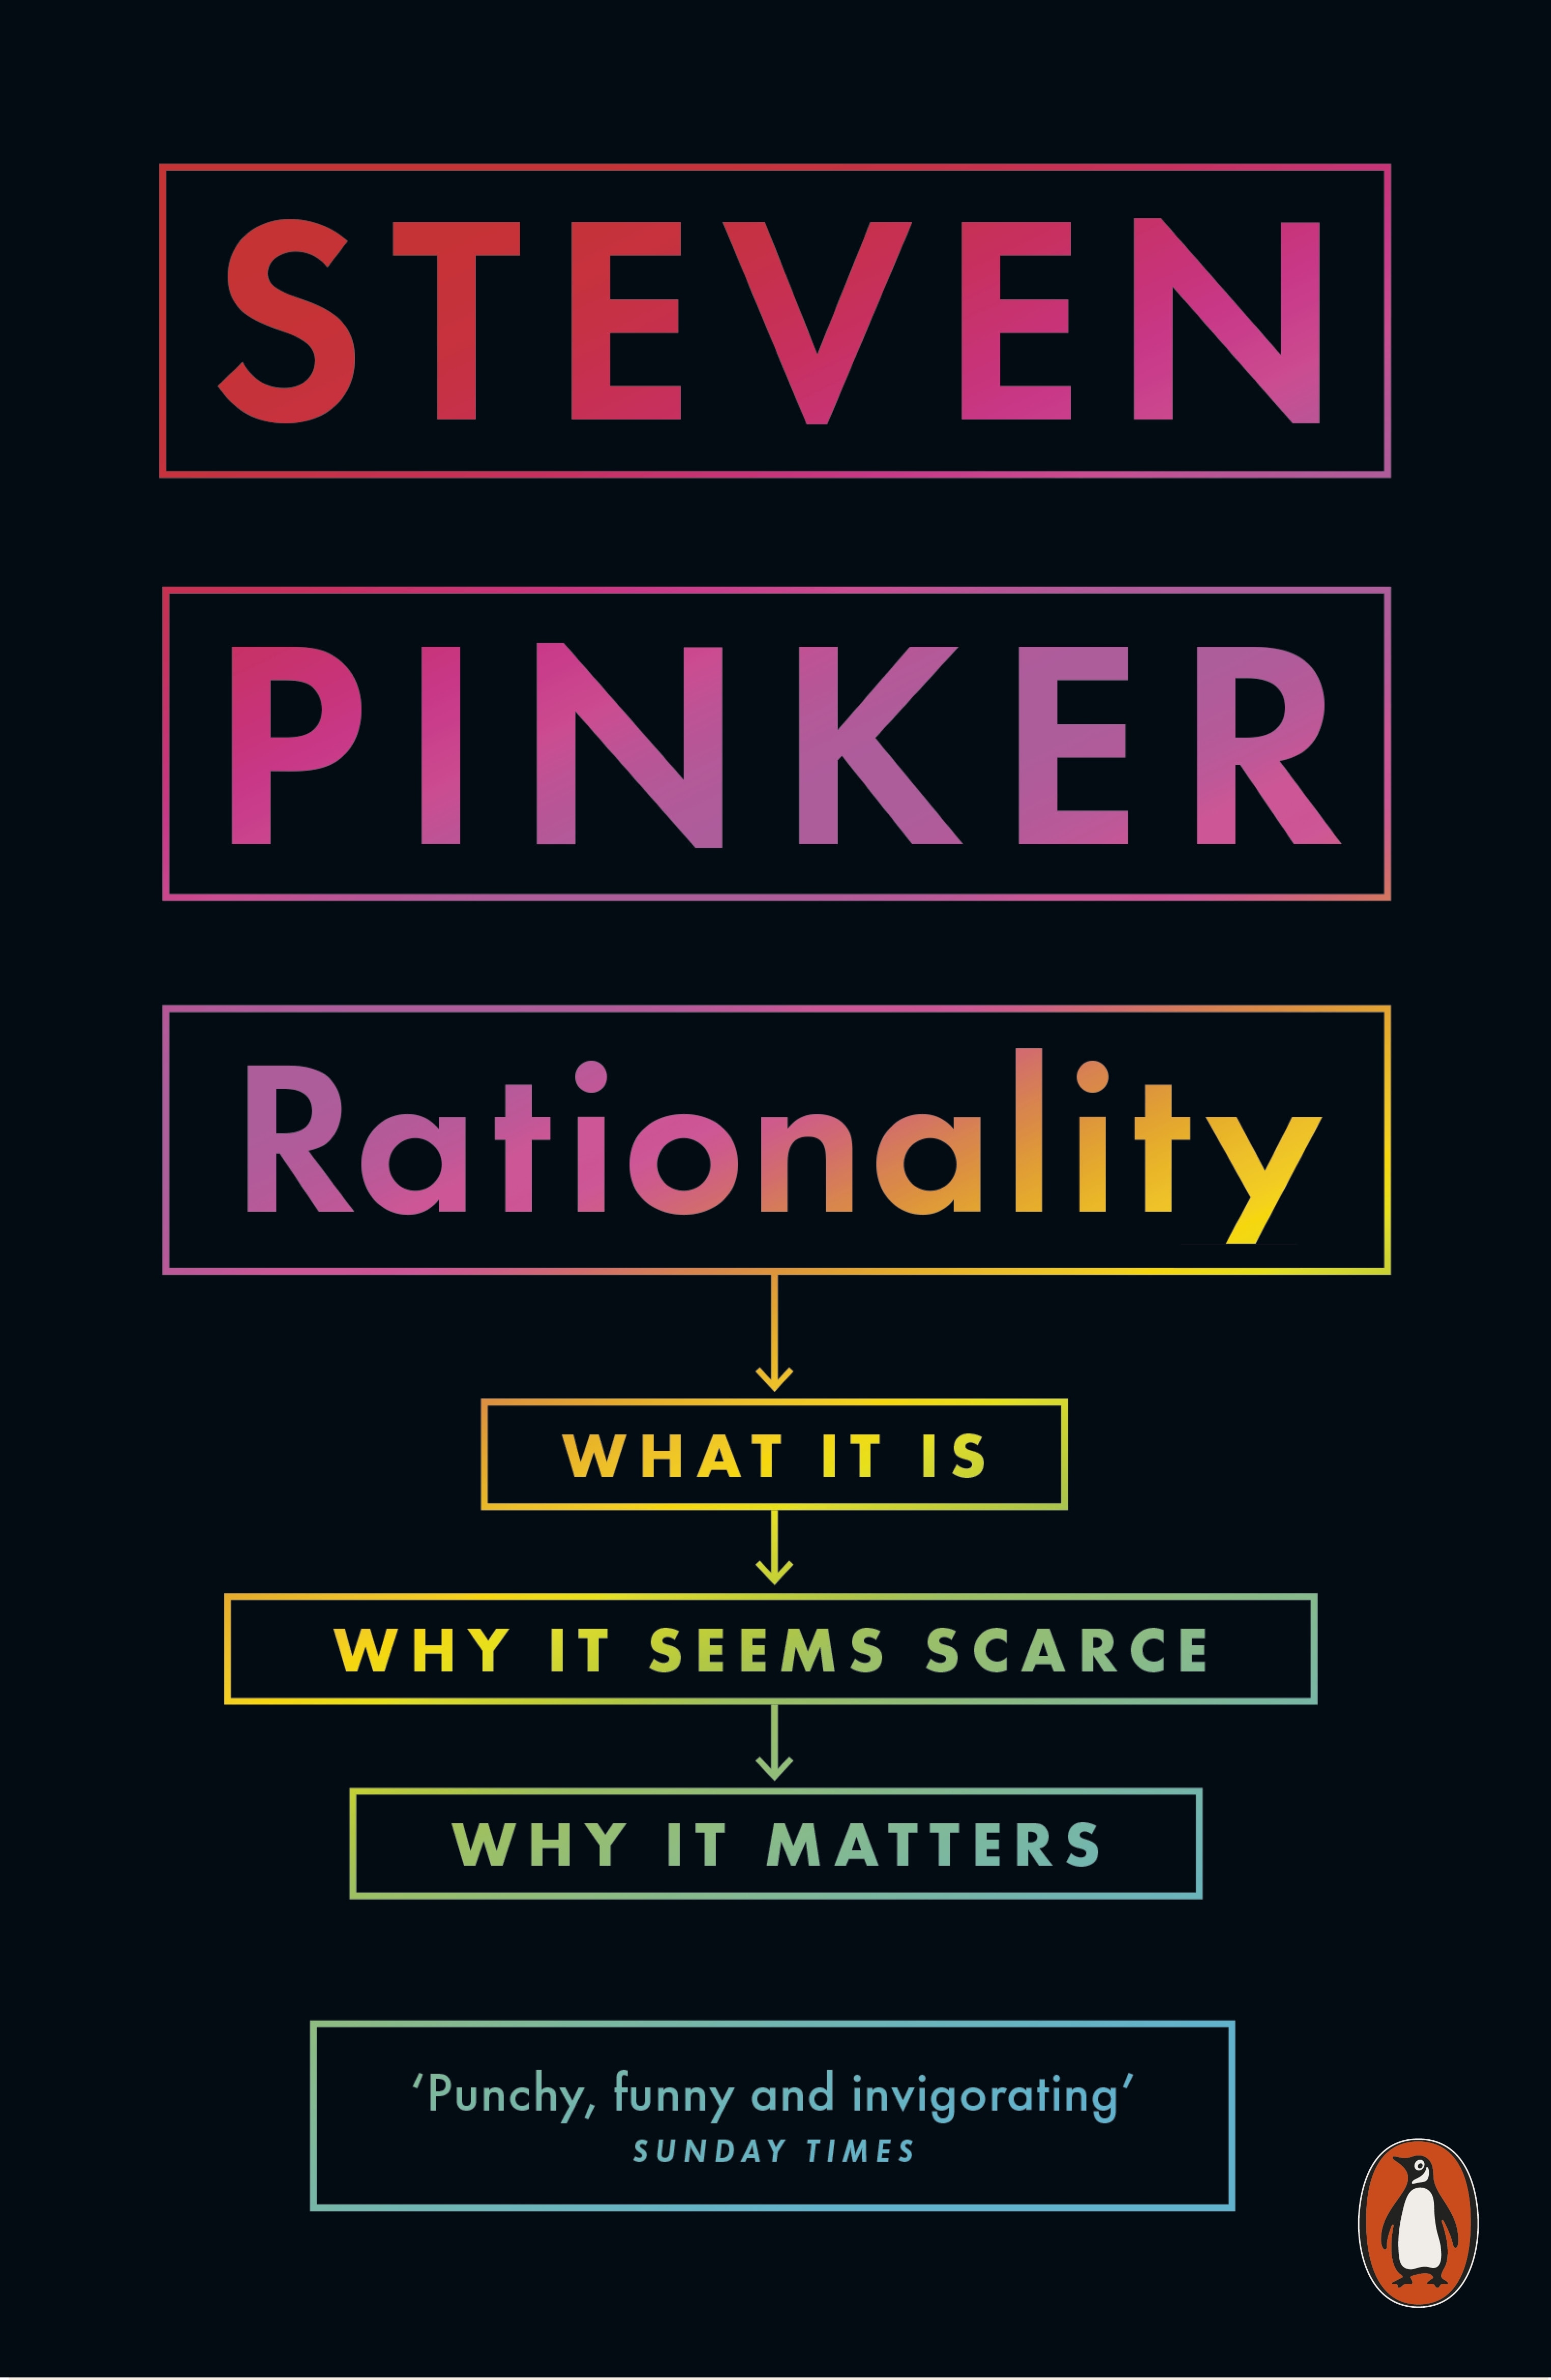 Book “Rationality” by Steven Pinker — September 1, 2022